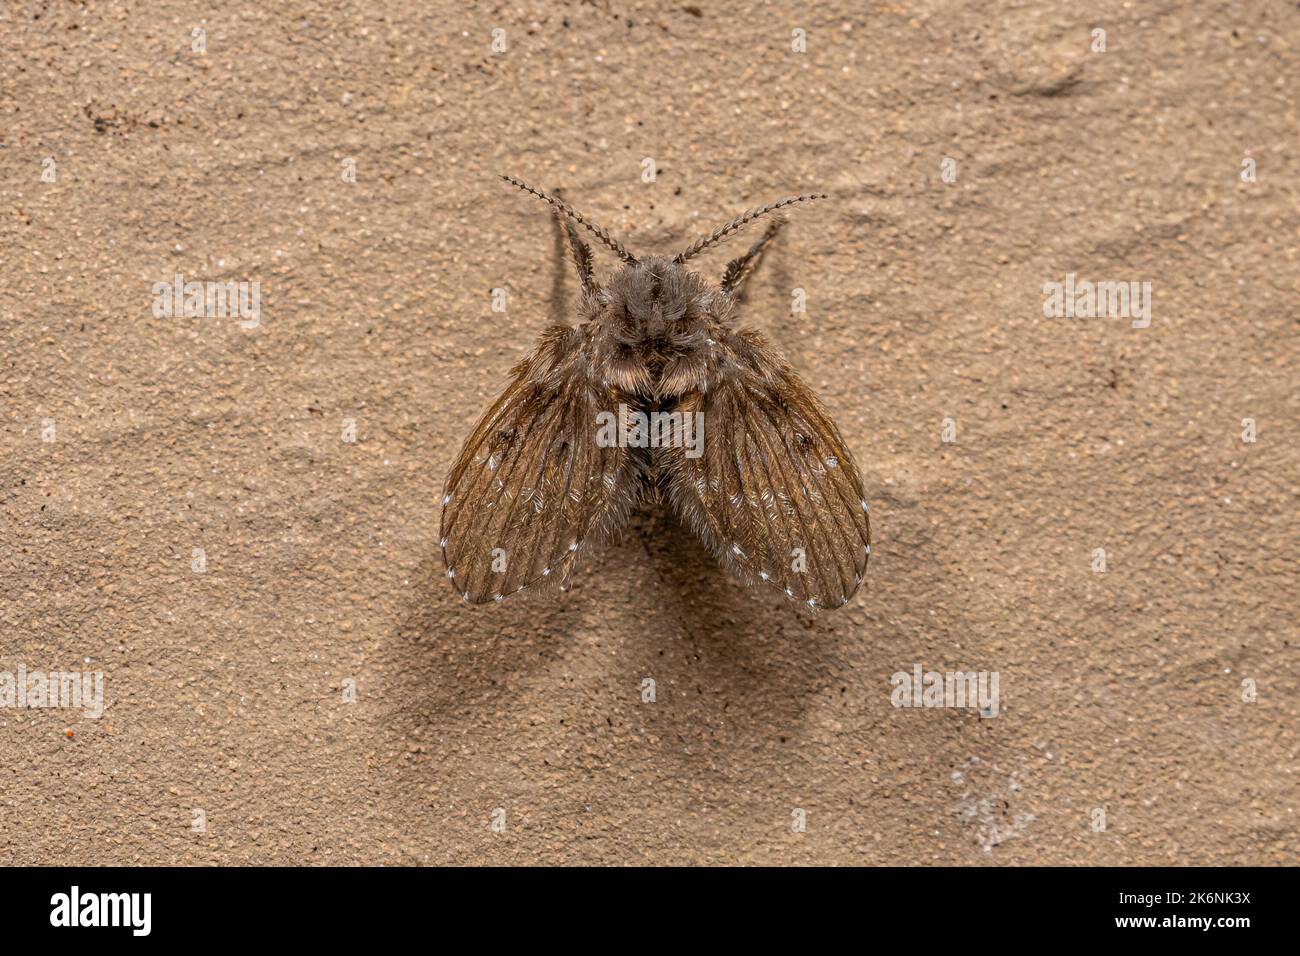 Adult Bathroom Moth Midge of the species Clogmia albipunctata Stock Photo